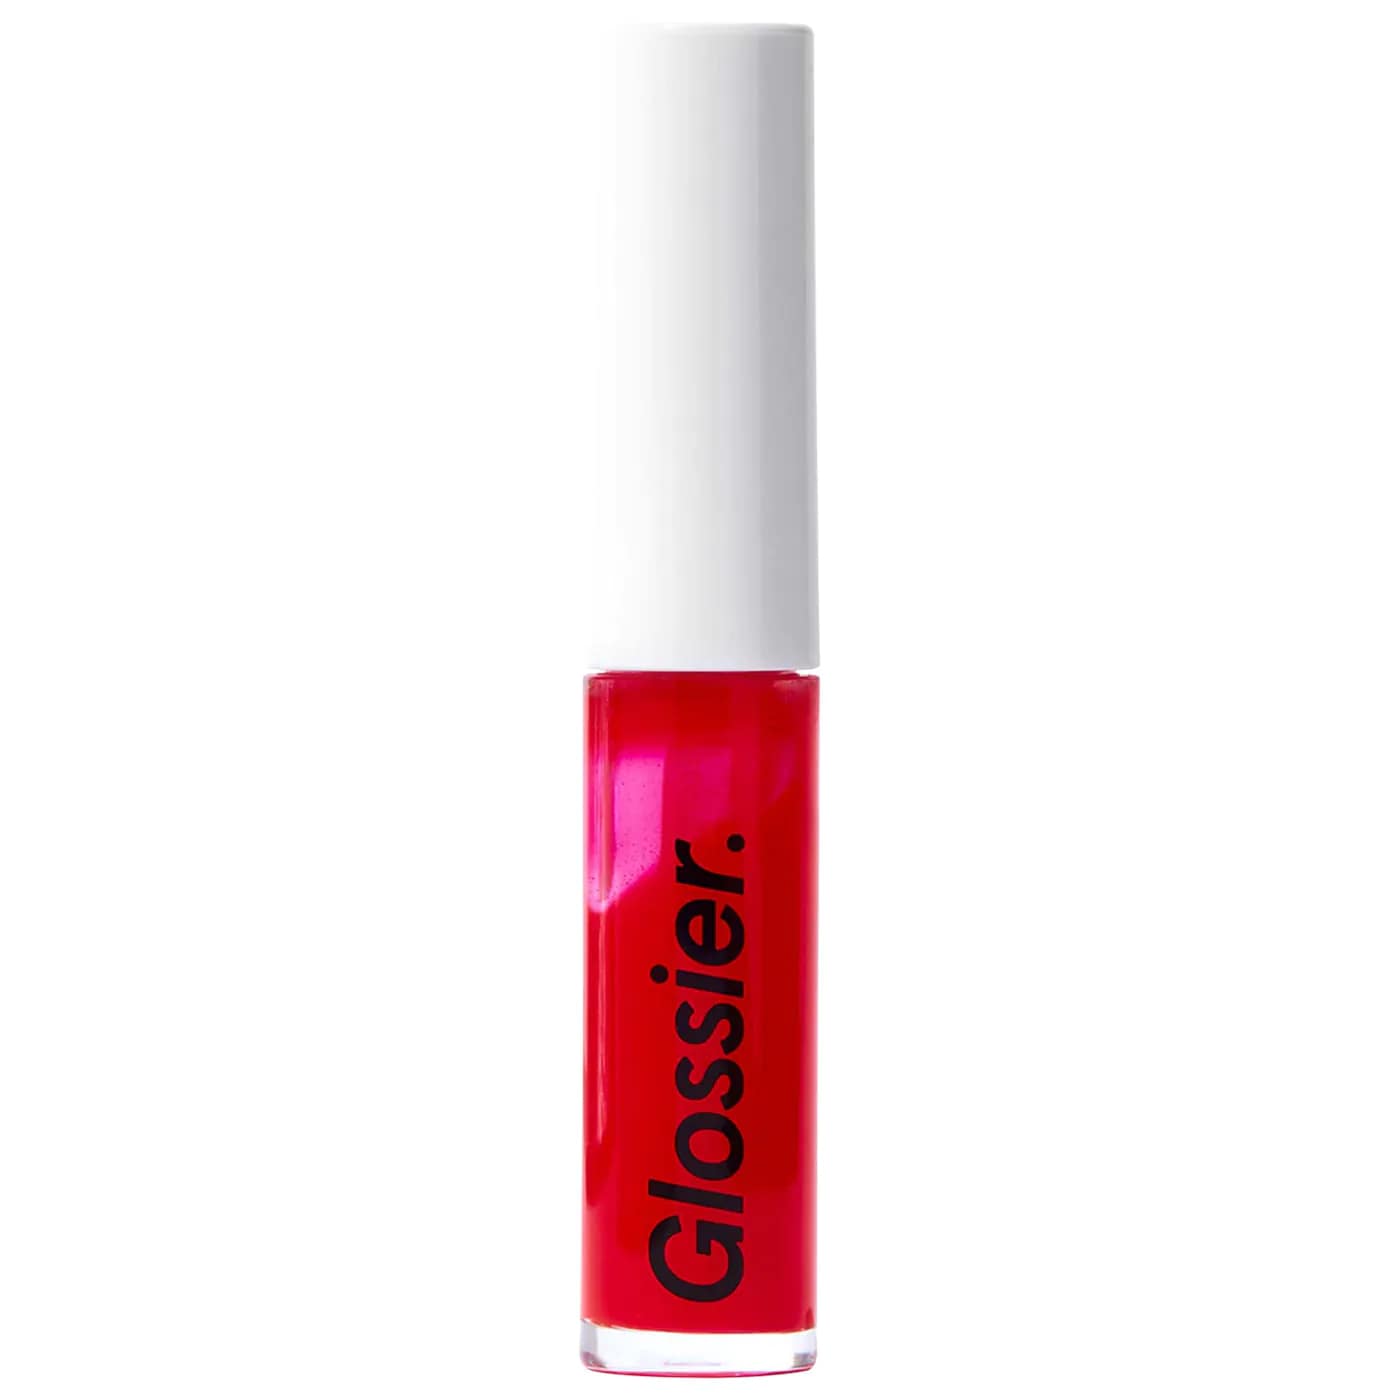 Gloss блеск для губ. Glossier блеск для губ. Бальзам для губ Lip Gloss. Блеск для губ Glossy Lips.